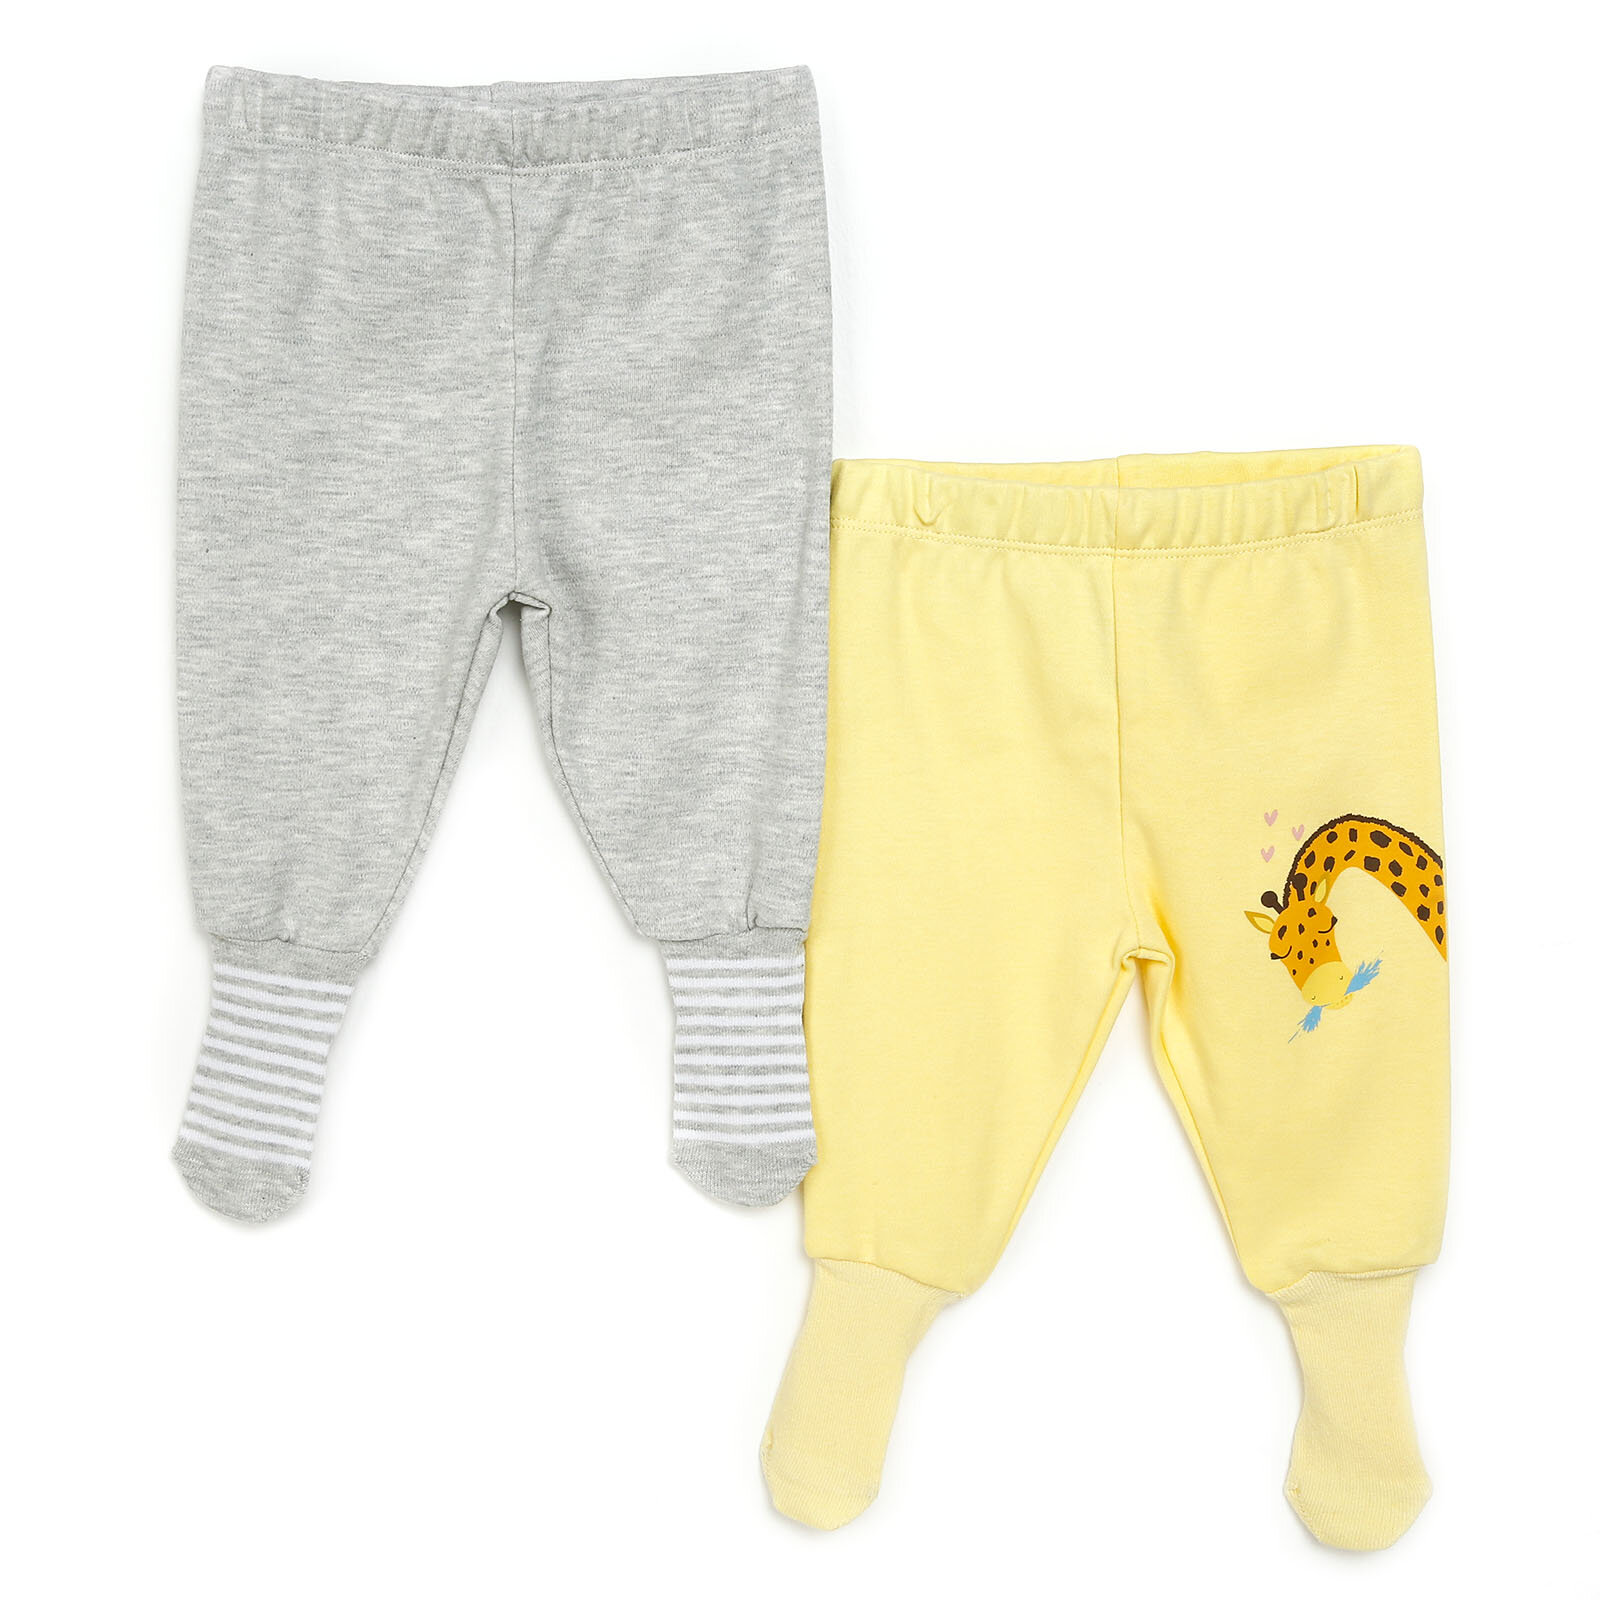 Basic Kız Bebek 2li Çoraplı Pijama Pantolon